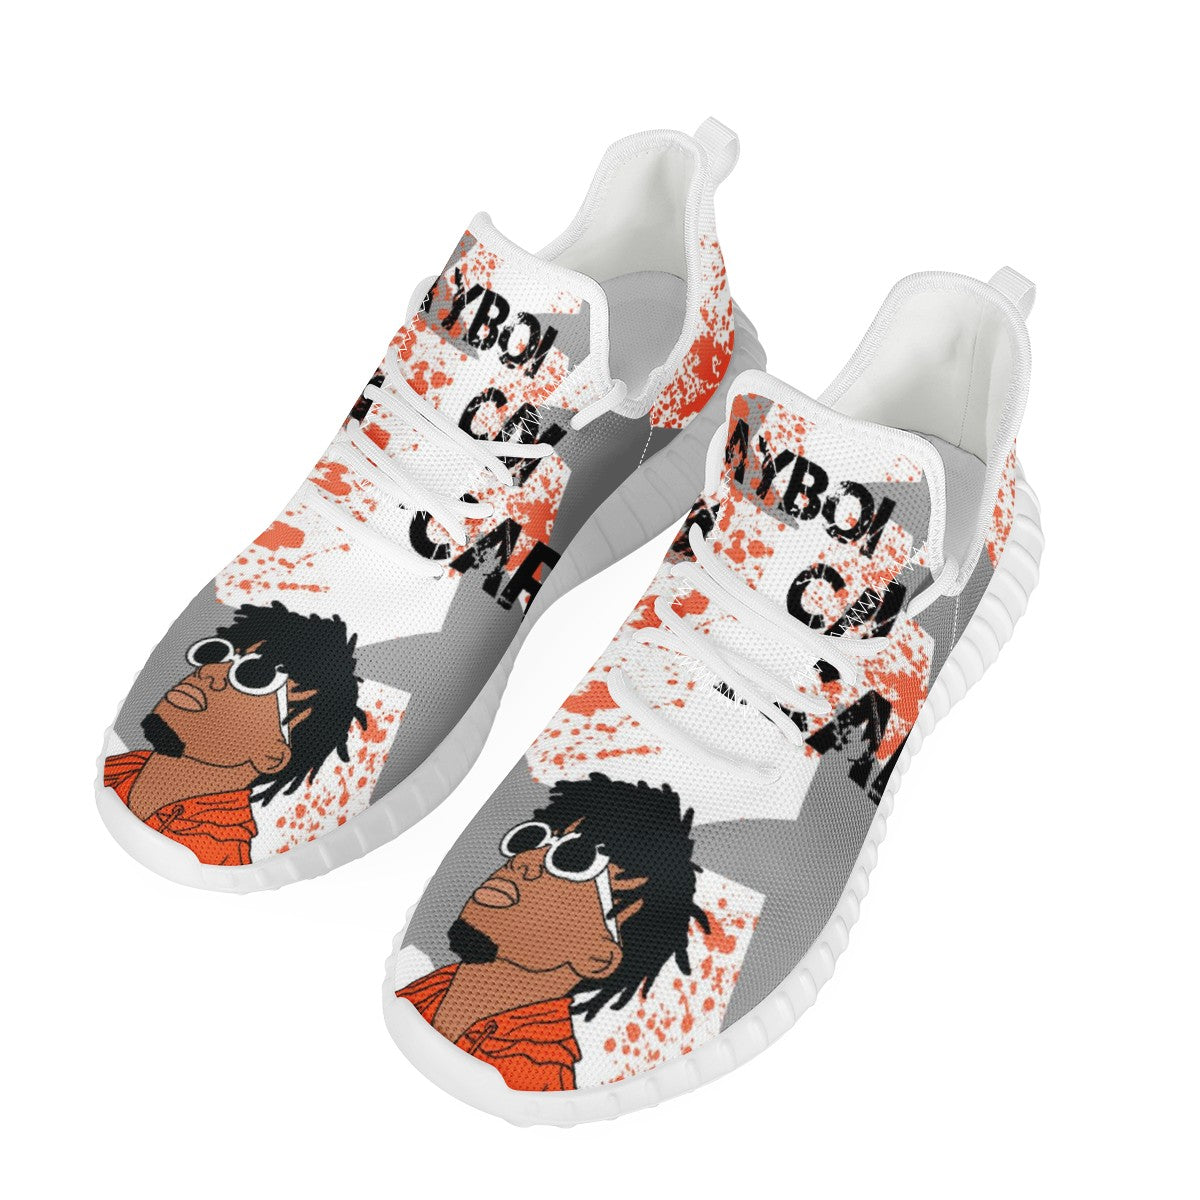 Playboi Carti Custom Yeezy Walking Shoes